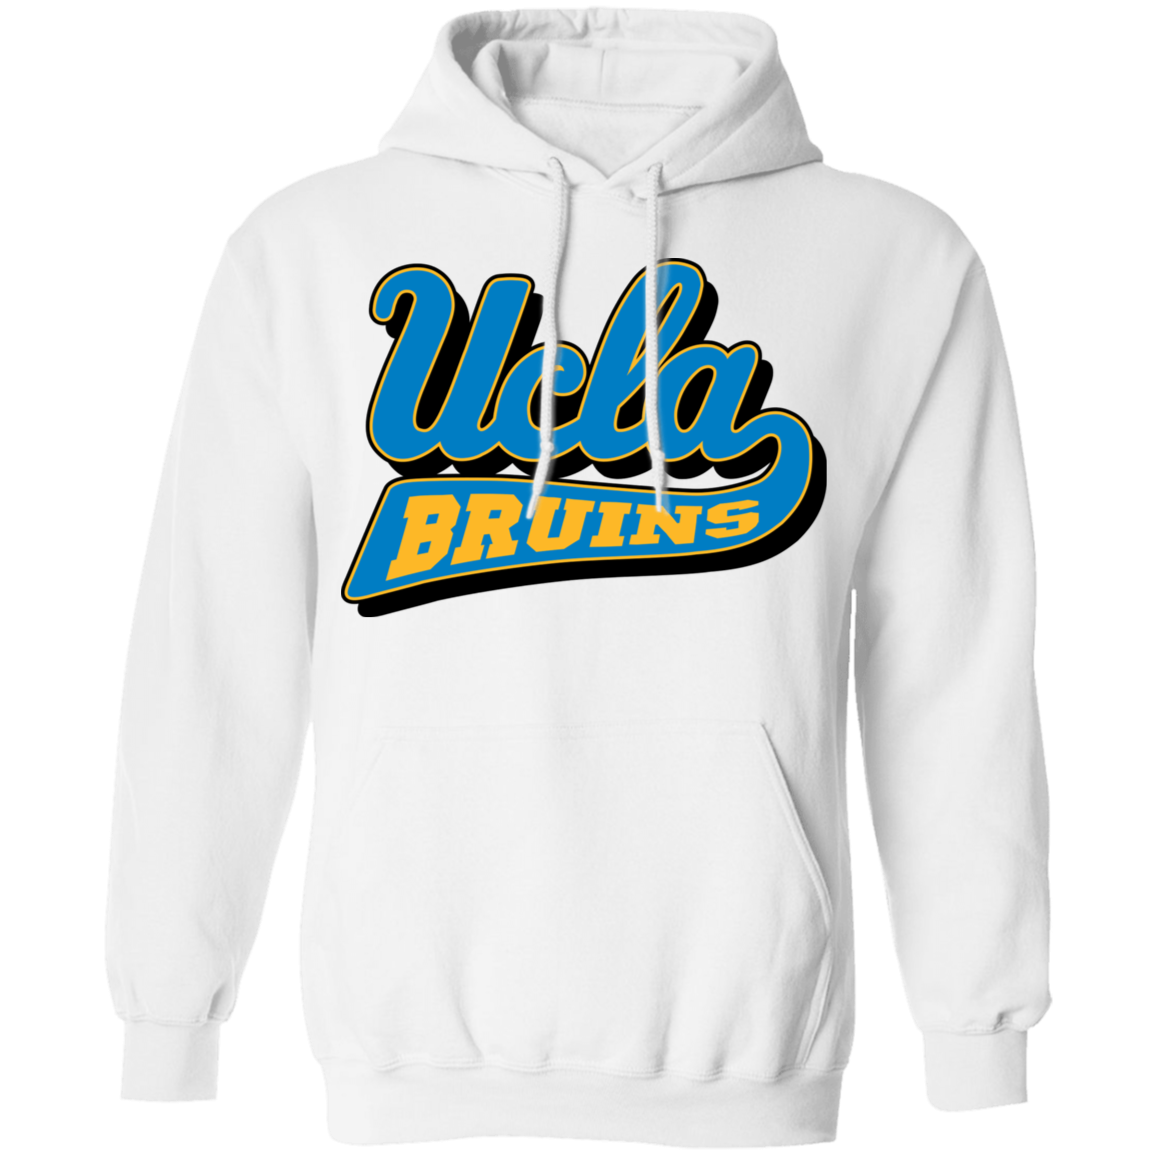 UCLA Bruins Logo Crewneck Sweatshirt - West Breeze Tee